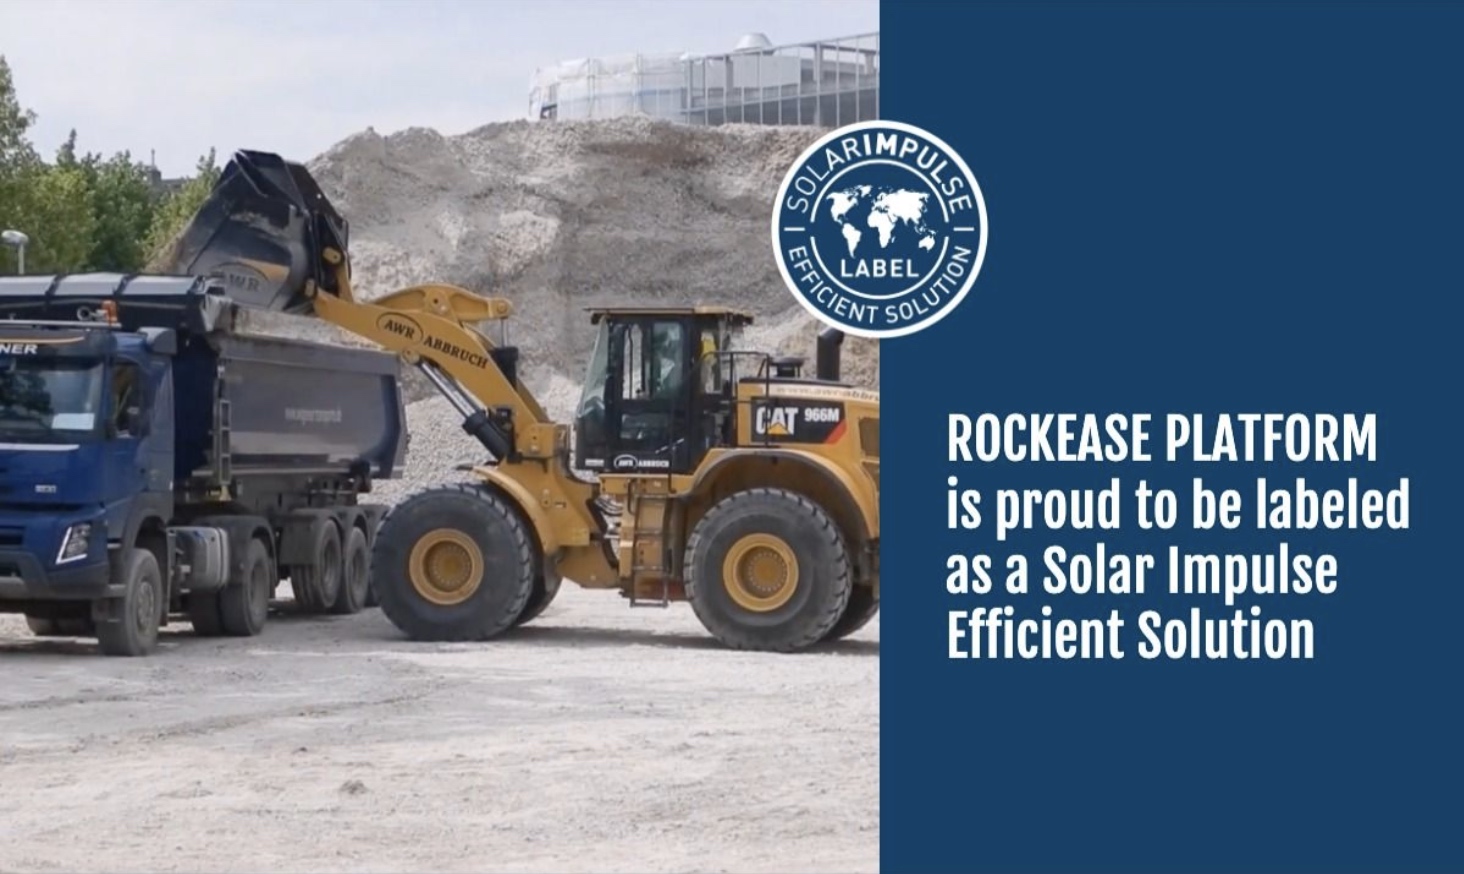 Rockease receives the “Solar Impulse Efficient Solution” label